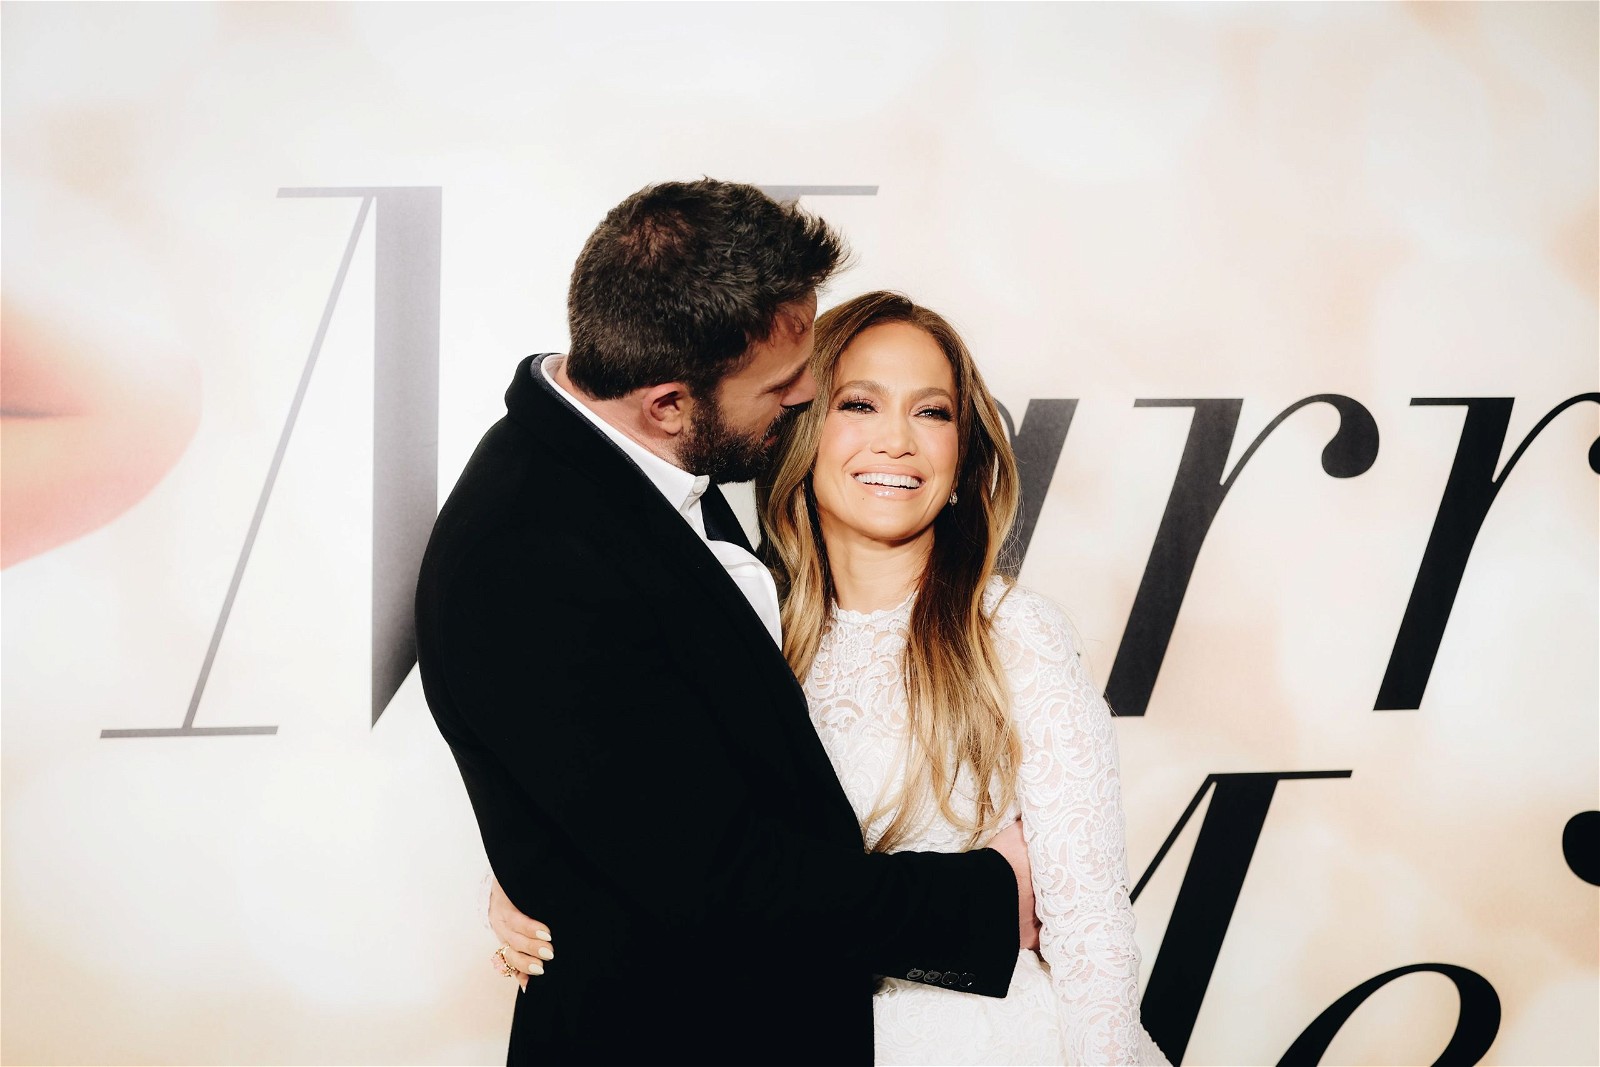 Ben Affleck and Jennifer Lopez at Marry Me premiere